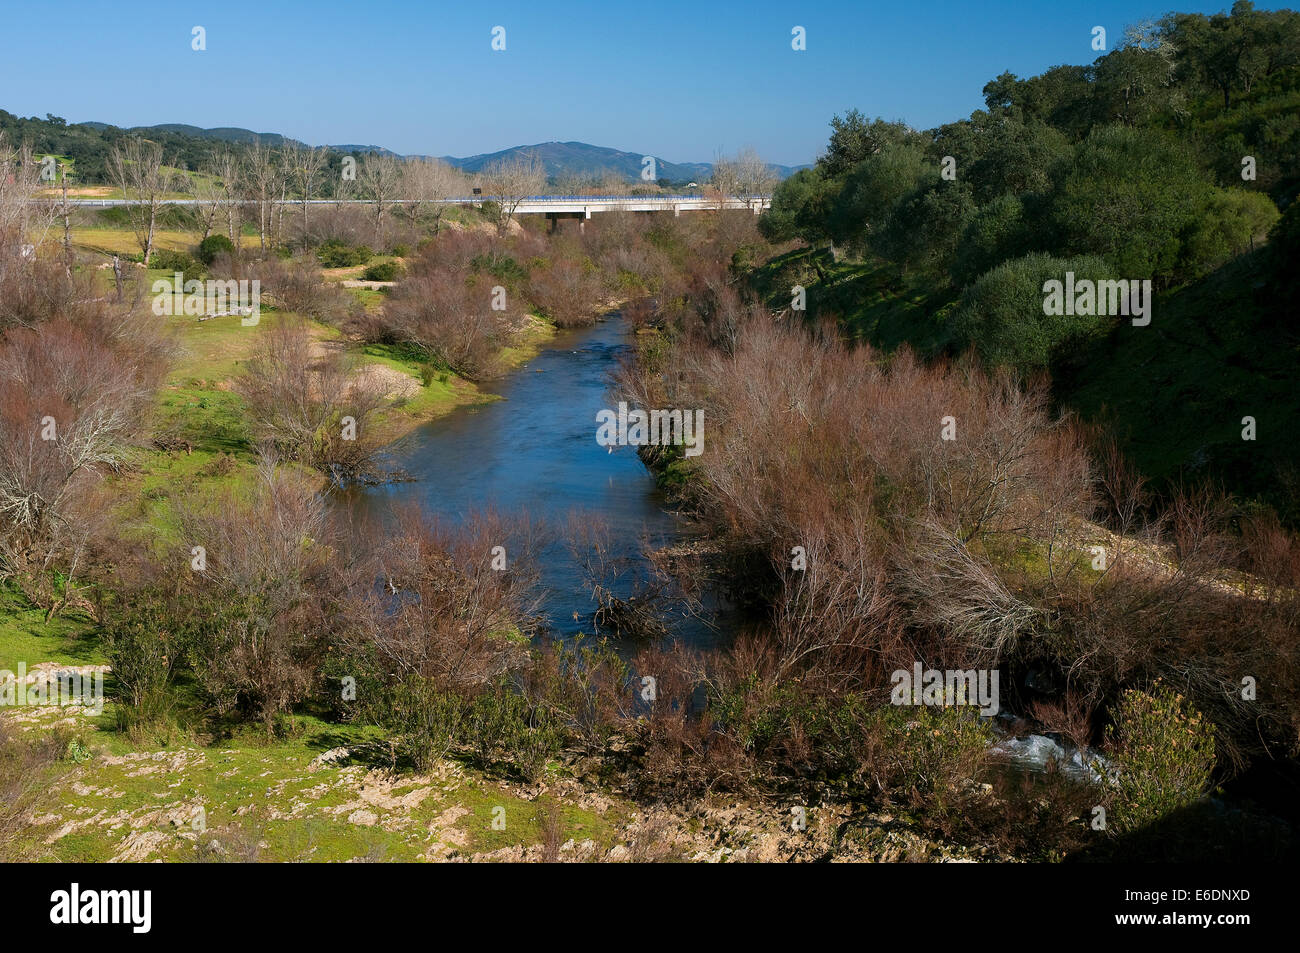 Chanza River, Water, Rosal de la frontera, Huelva province, Region of Andalusia, Spain, Europe Stock Photo